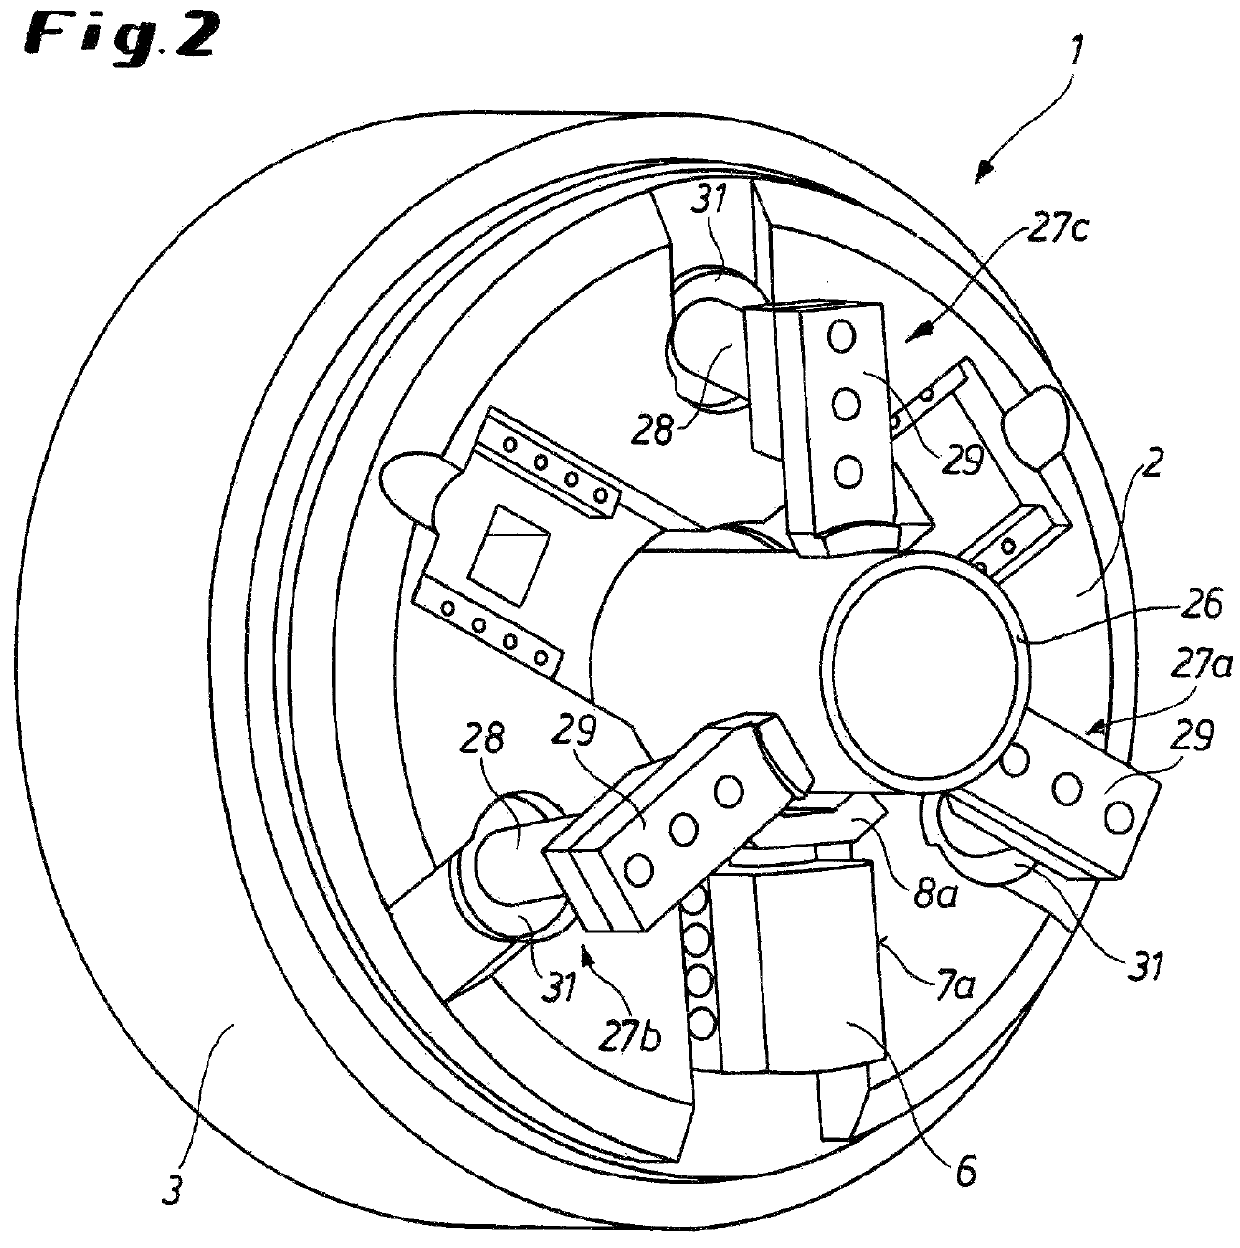 Chuck for apparatus for machining a tubular rotating workpiece